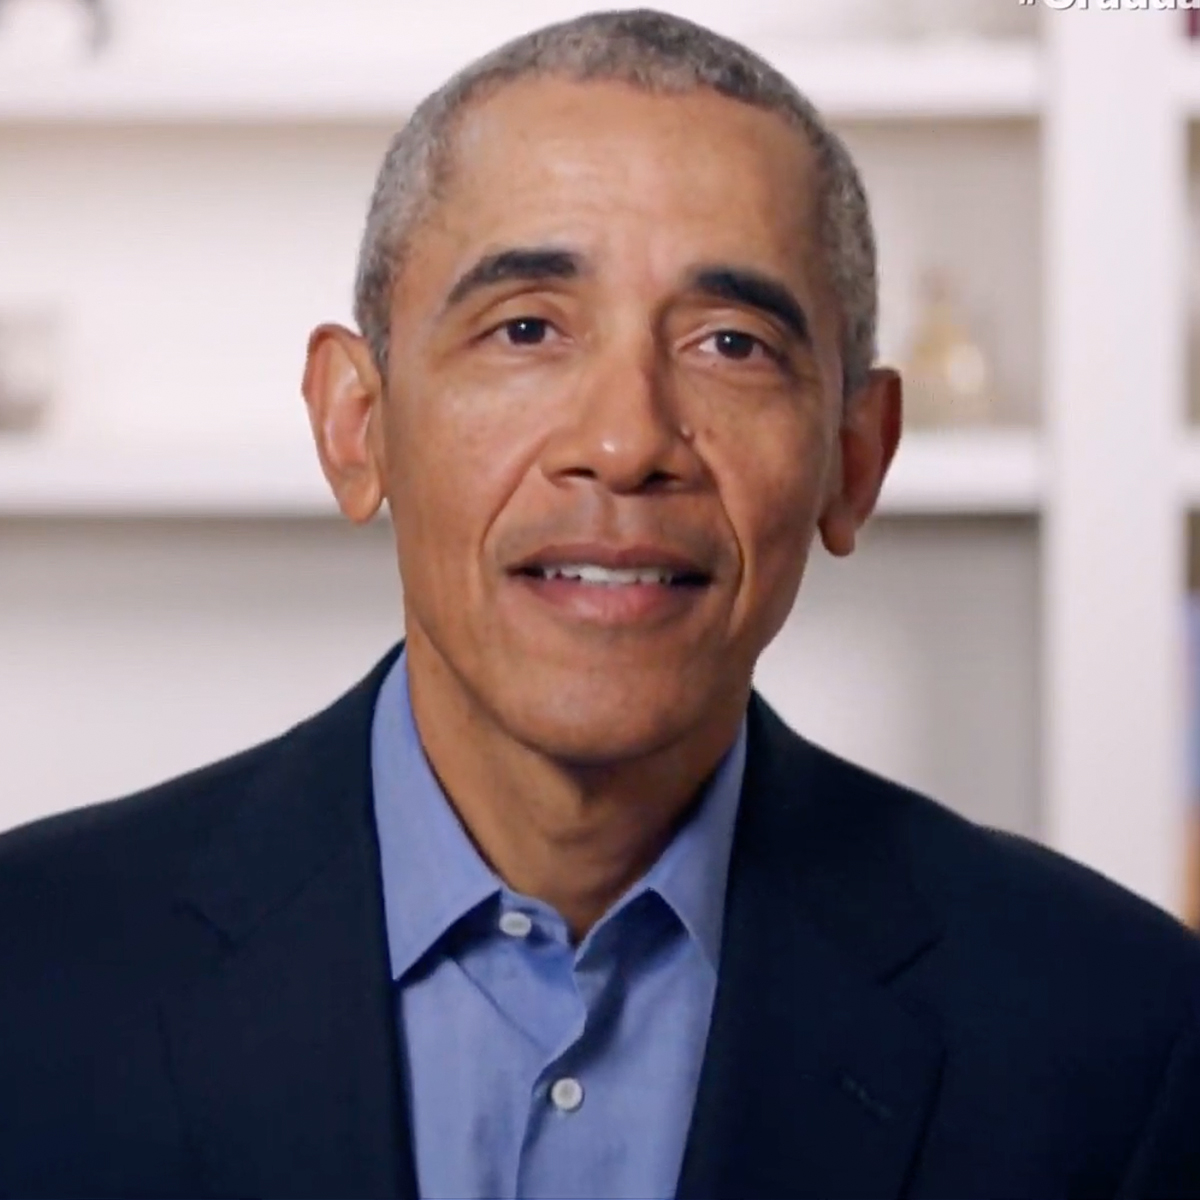 Barack Obama Delivers Uniting Speech to Class of 2020 - E ...